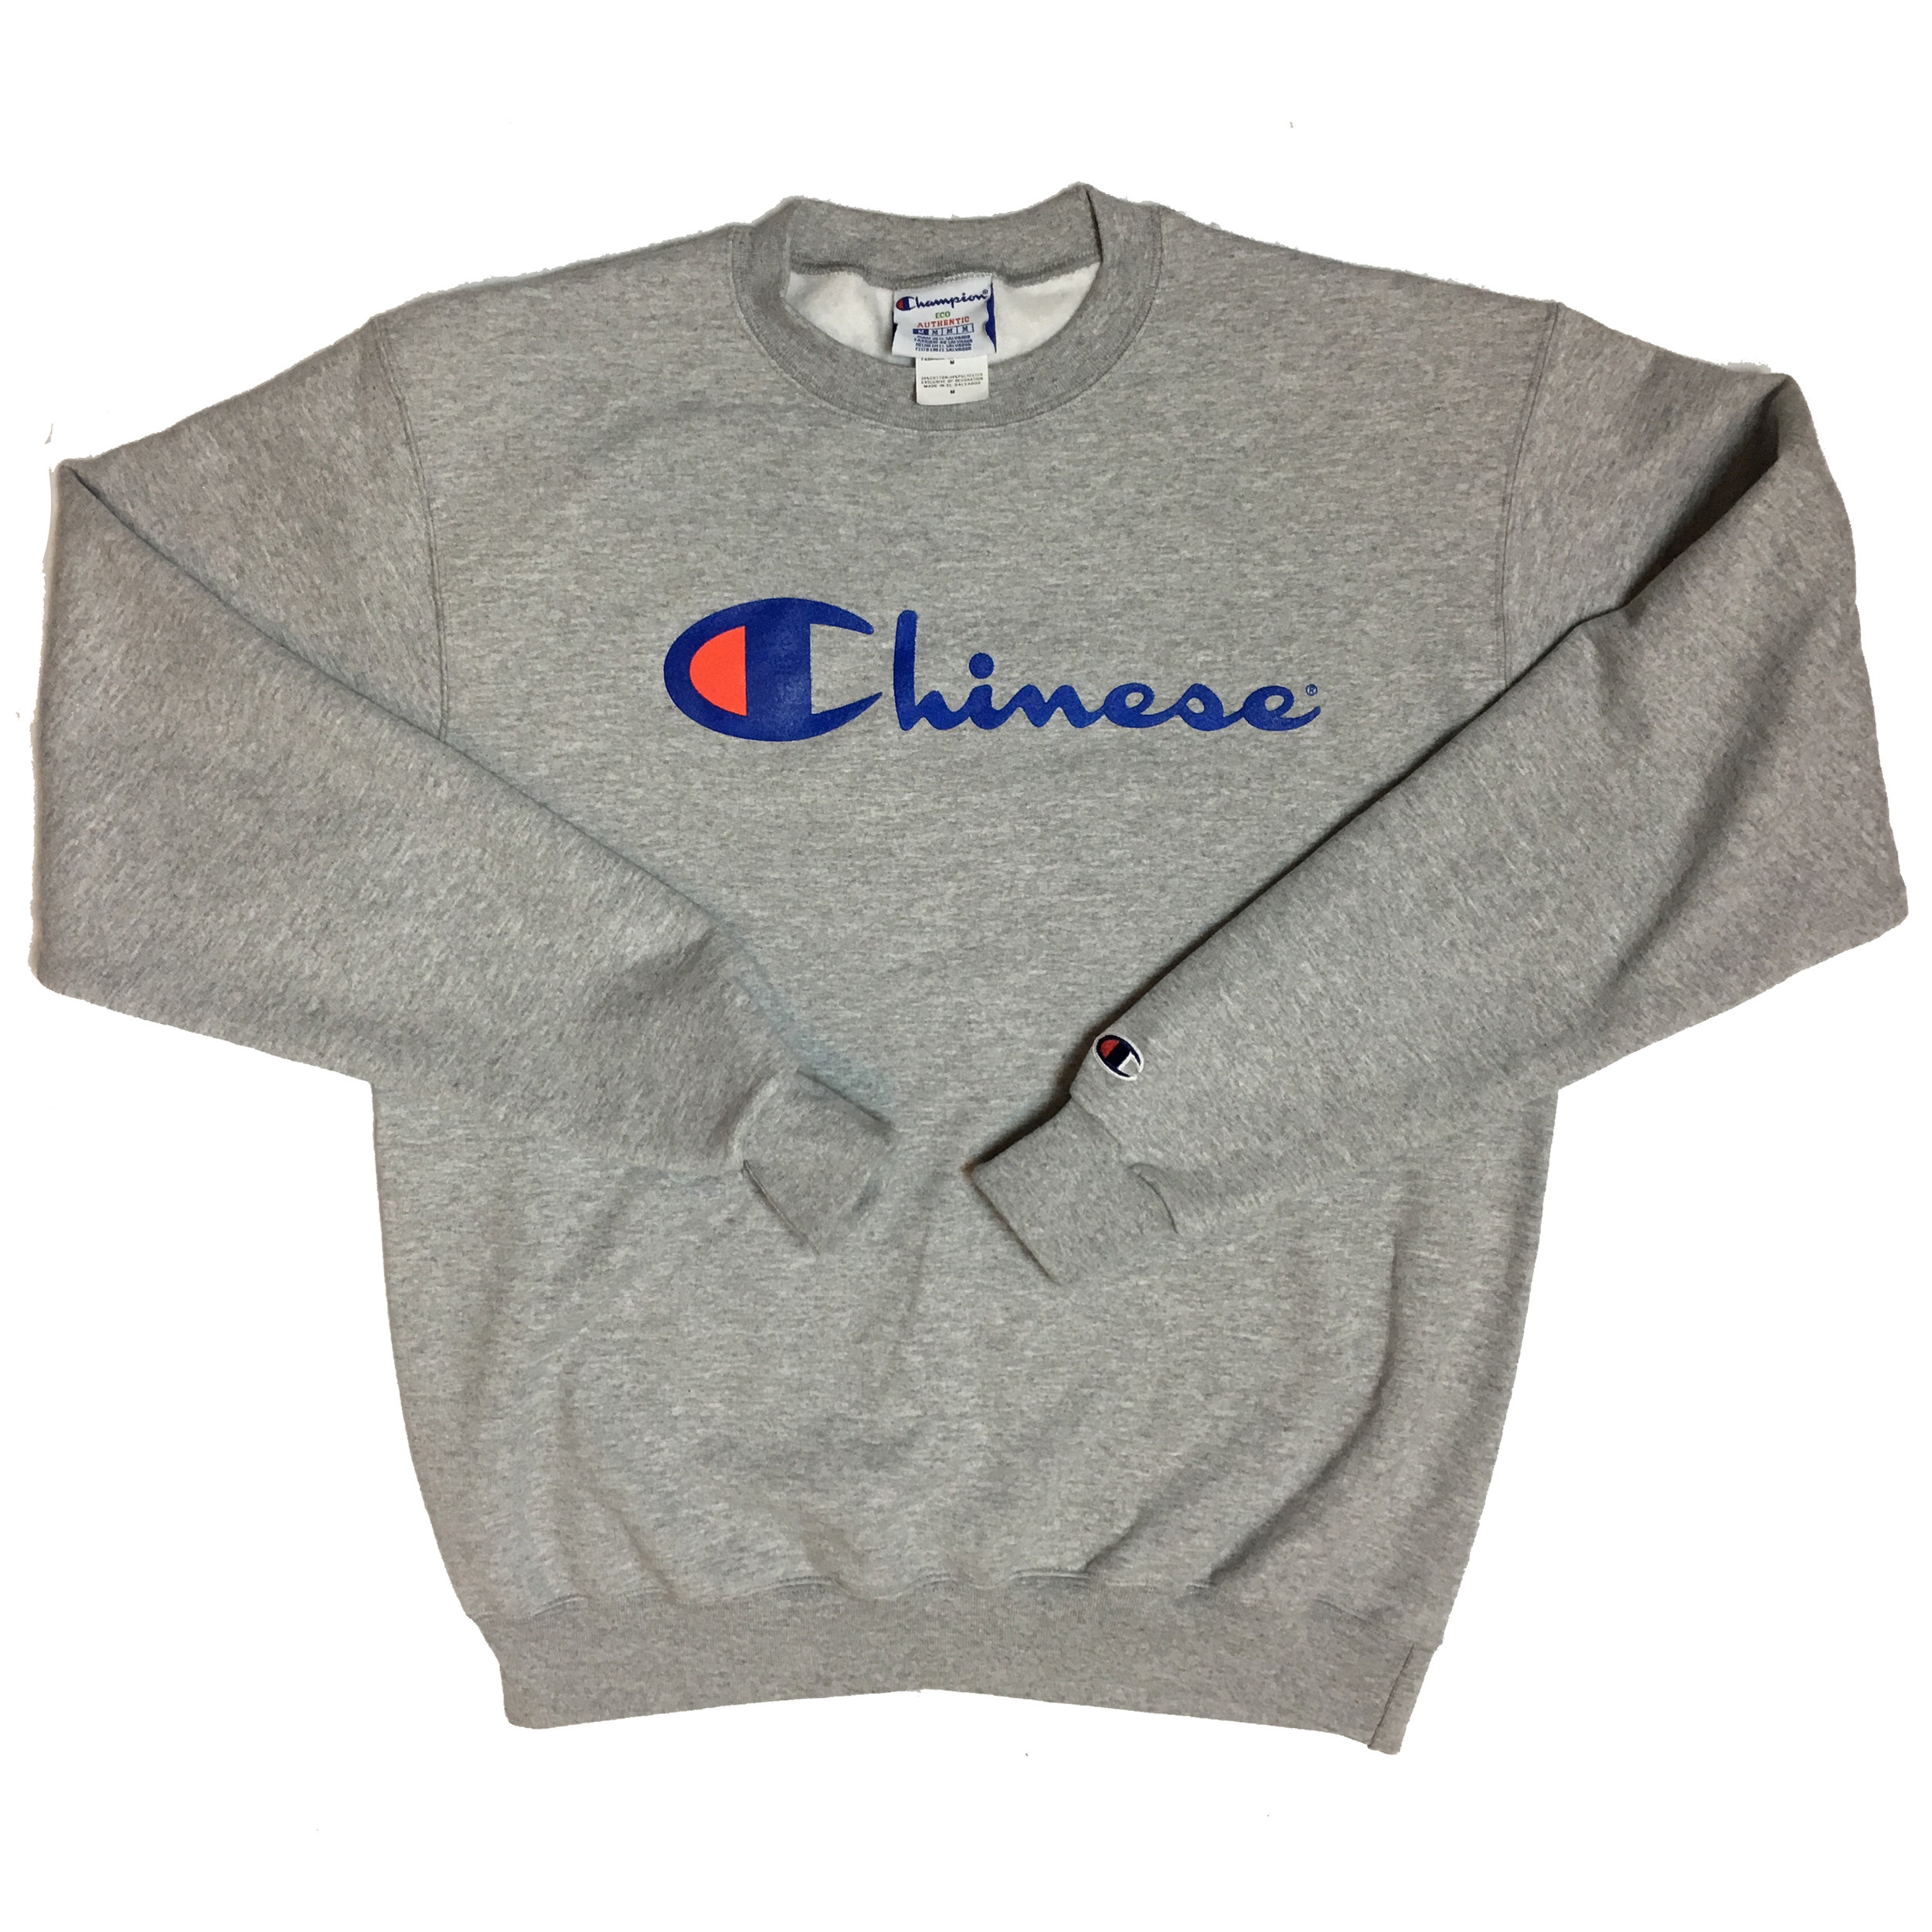 chinese champion sweater